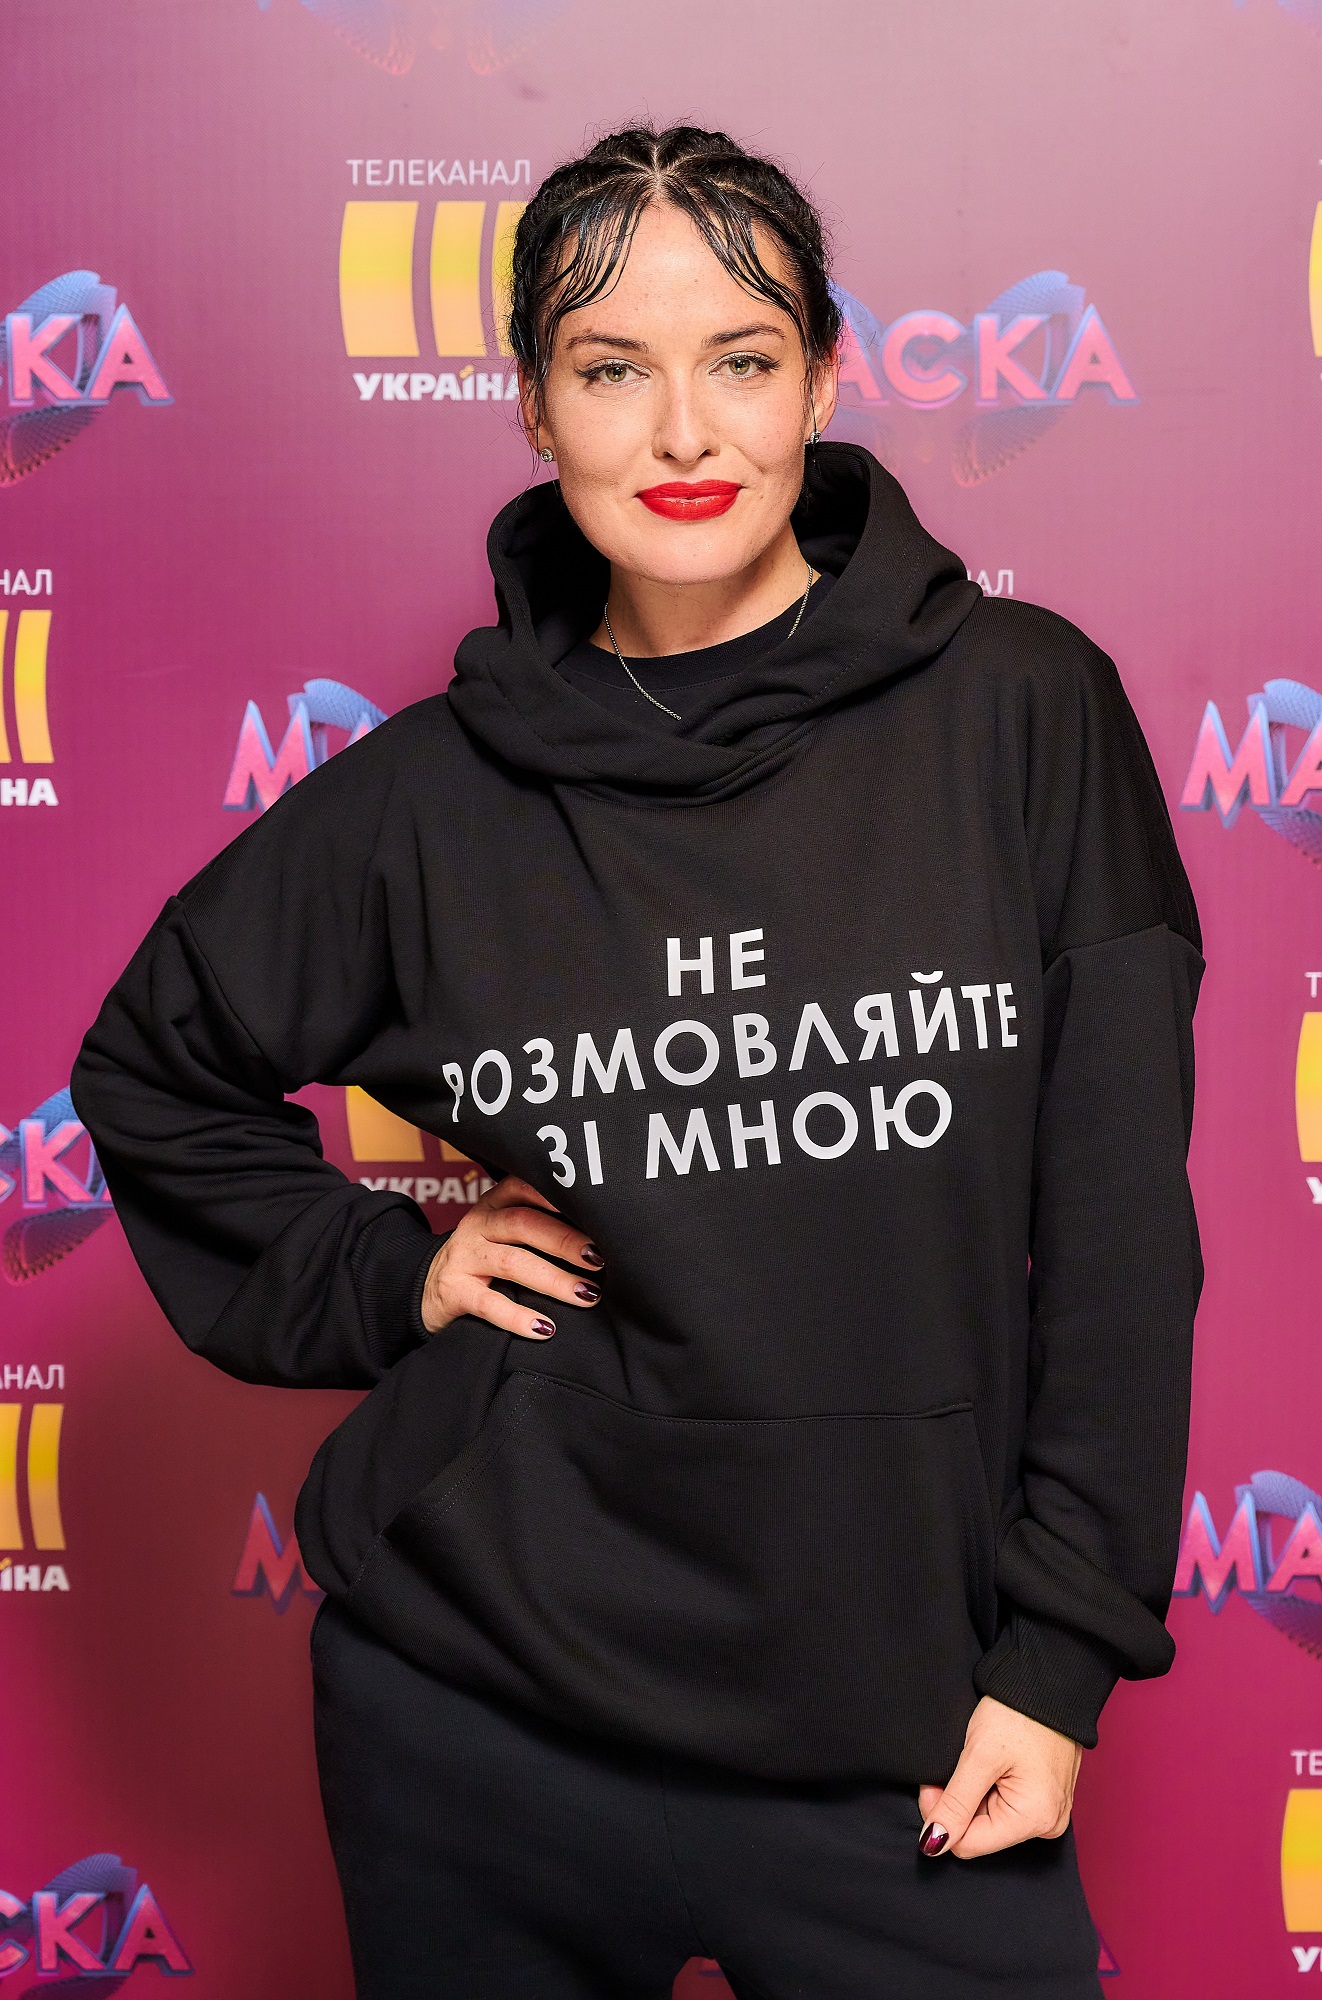 Фото: kanalukraina.tv/ru